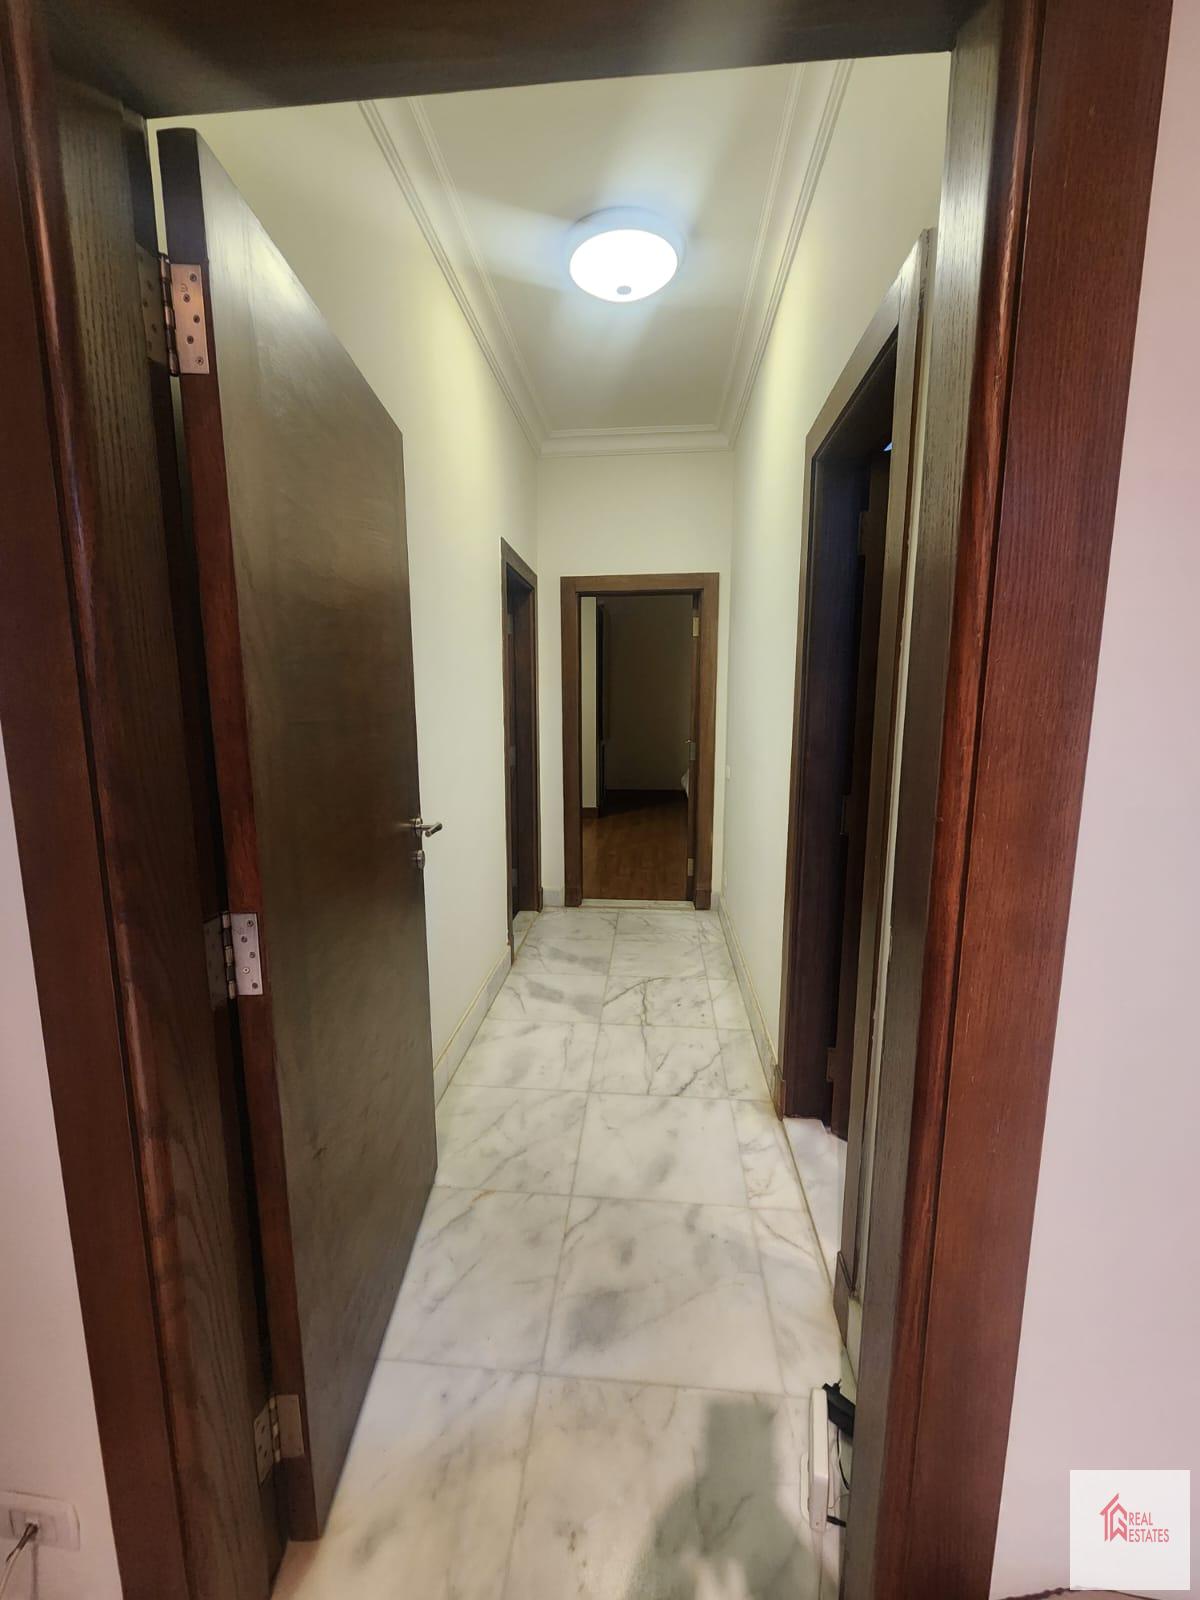 2 bedrooms 2 bathroom modern furnished apartments rent maadi sarayate